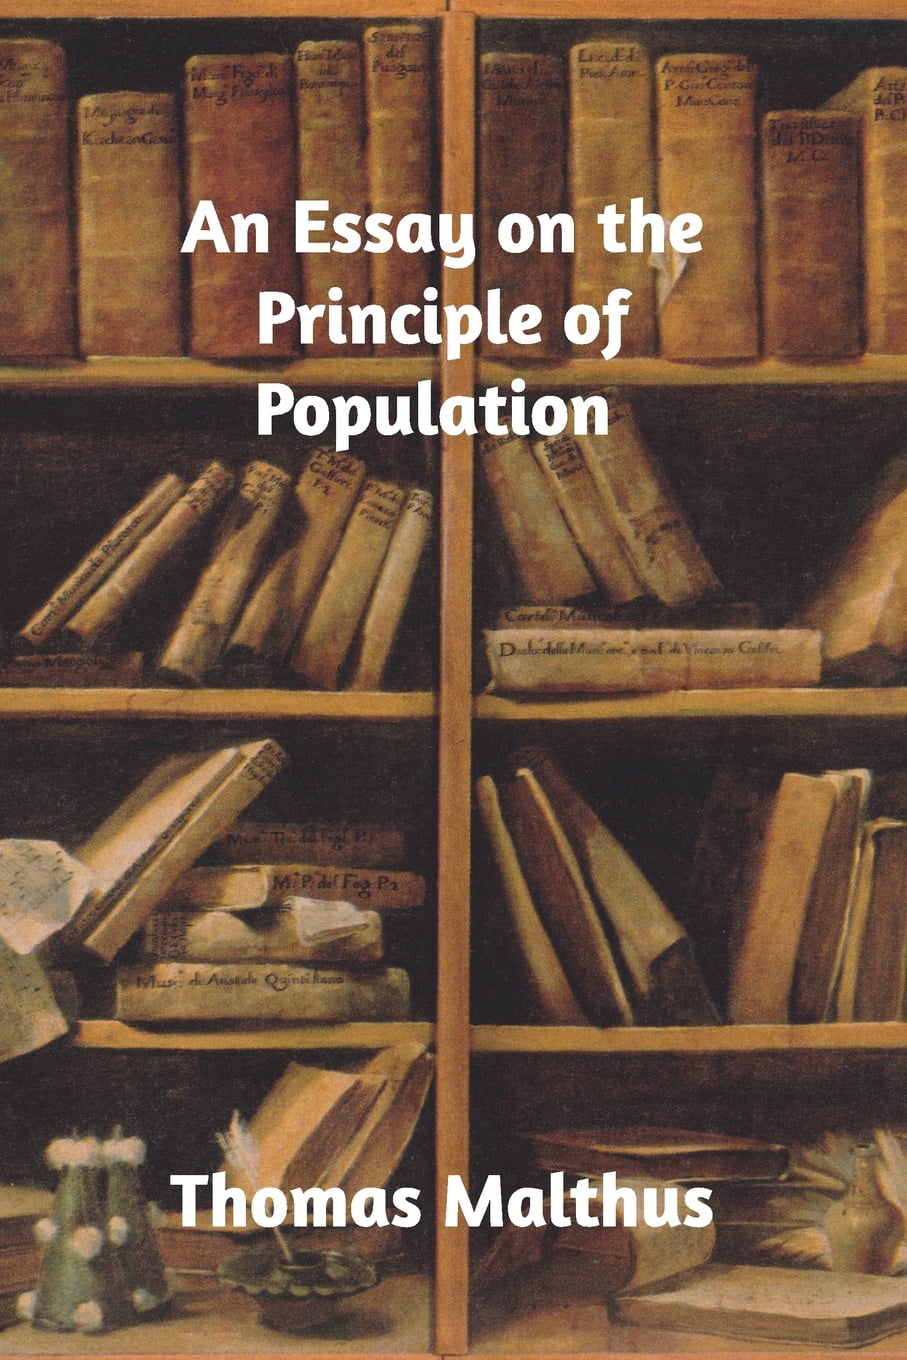 an essay on the principle of population epub